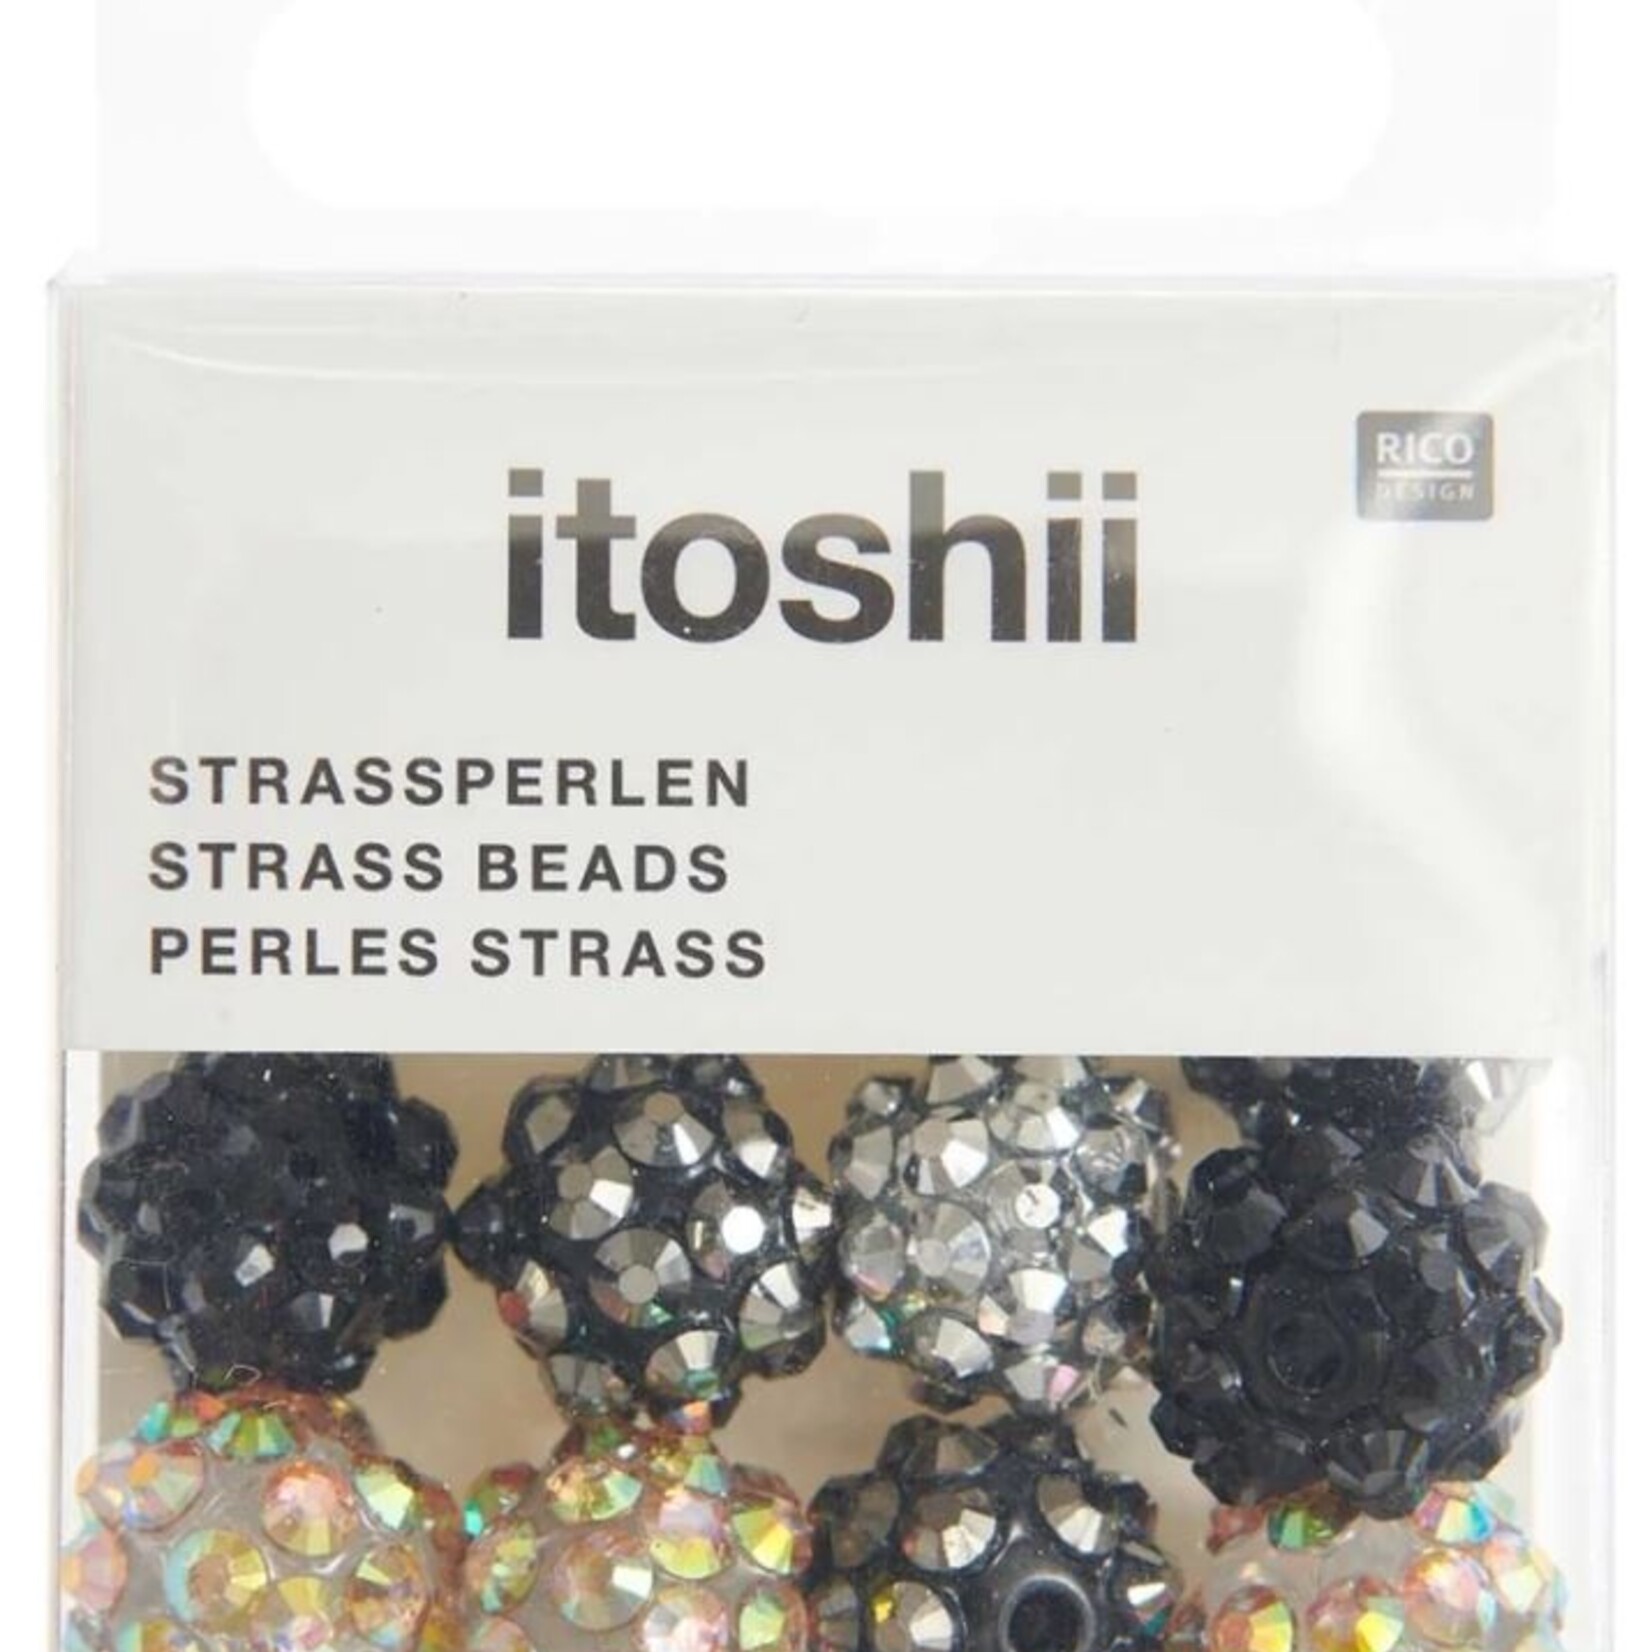 RICO Strass beads, black mix, 12 pcs, ca. 11 mm